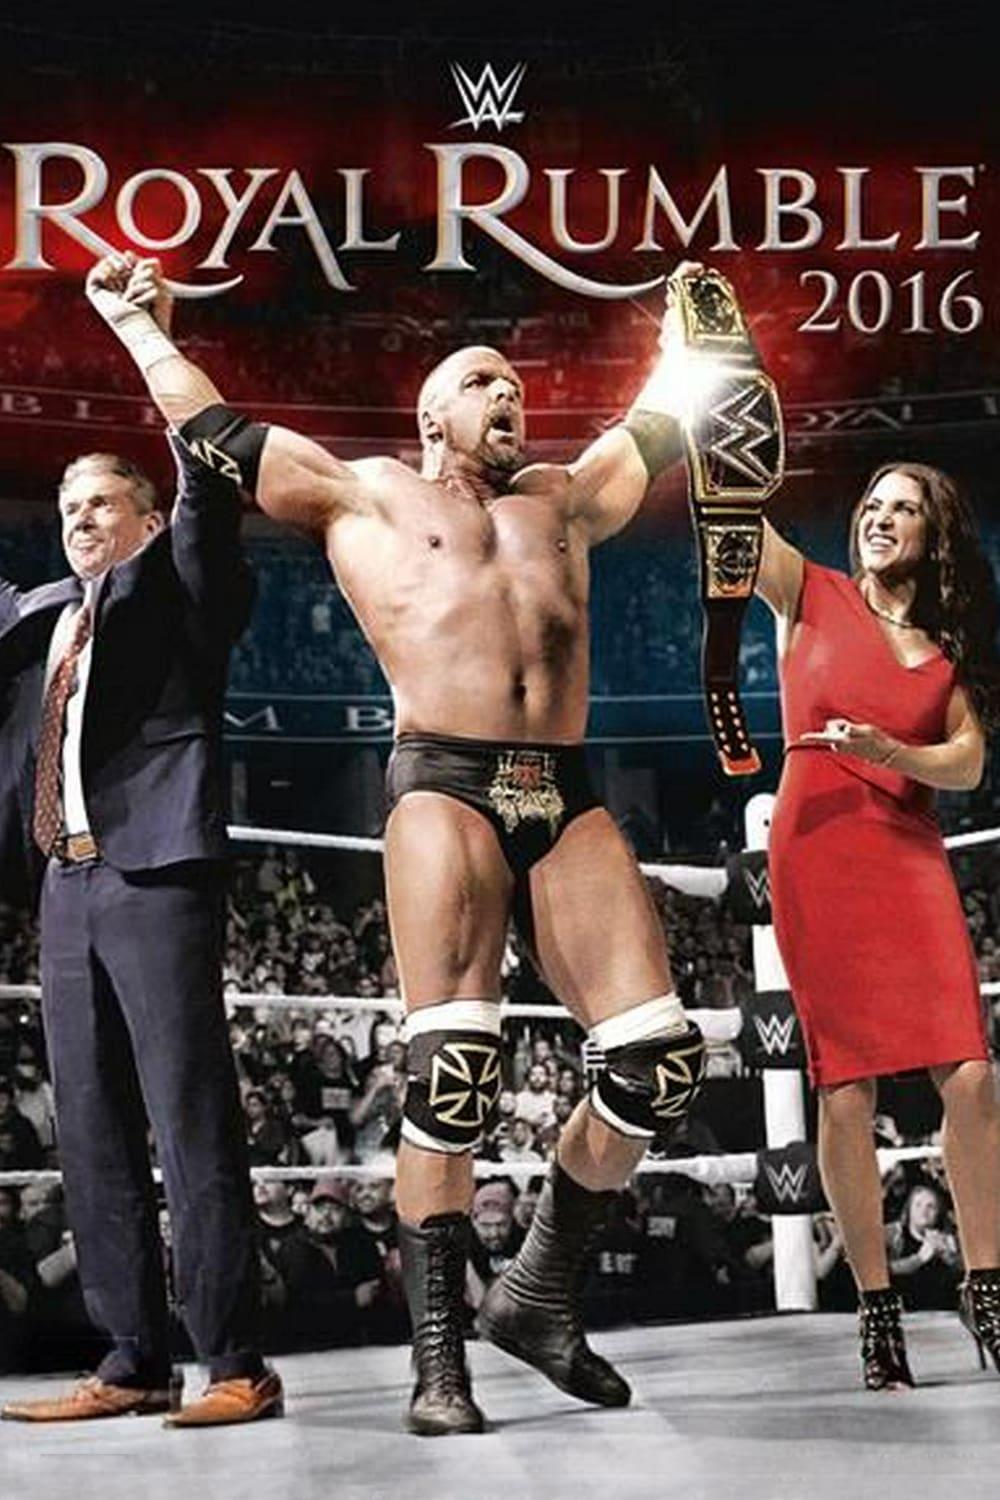 WWE Royal Rumble 2016 poster